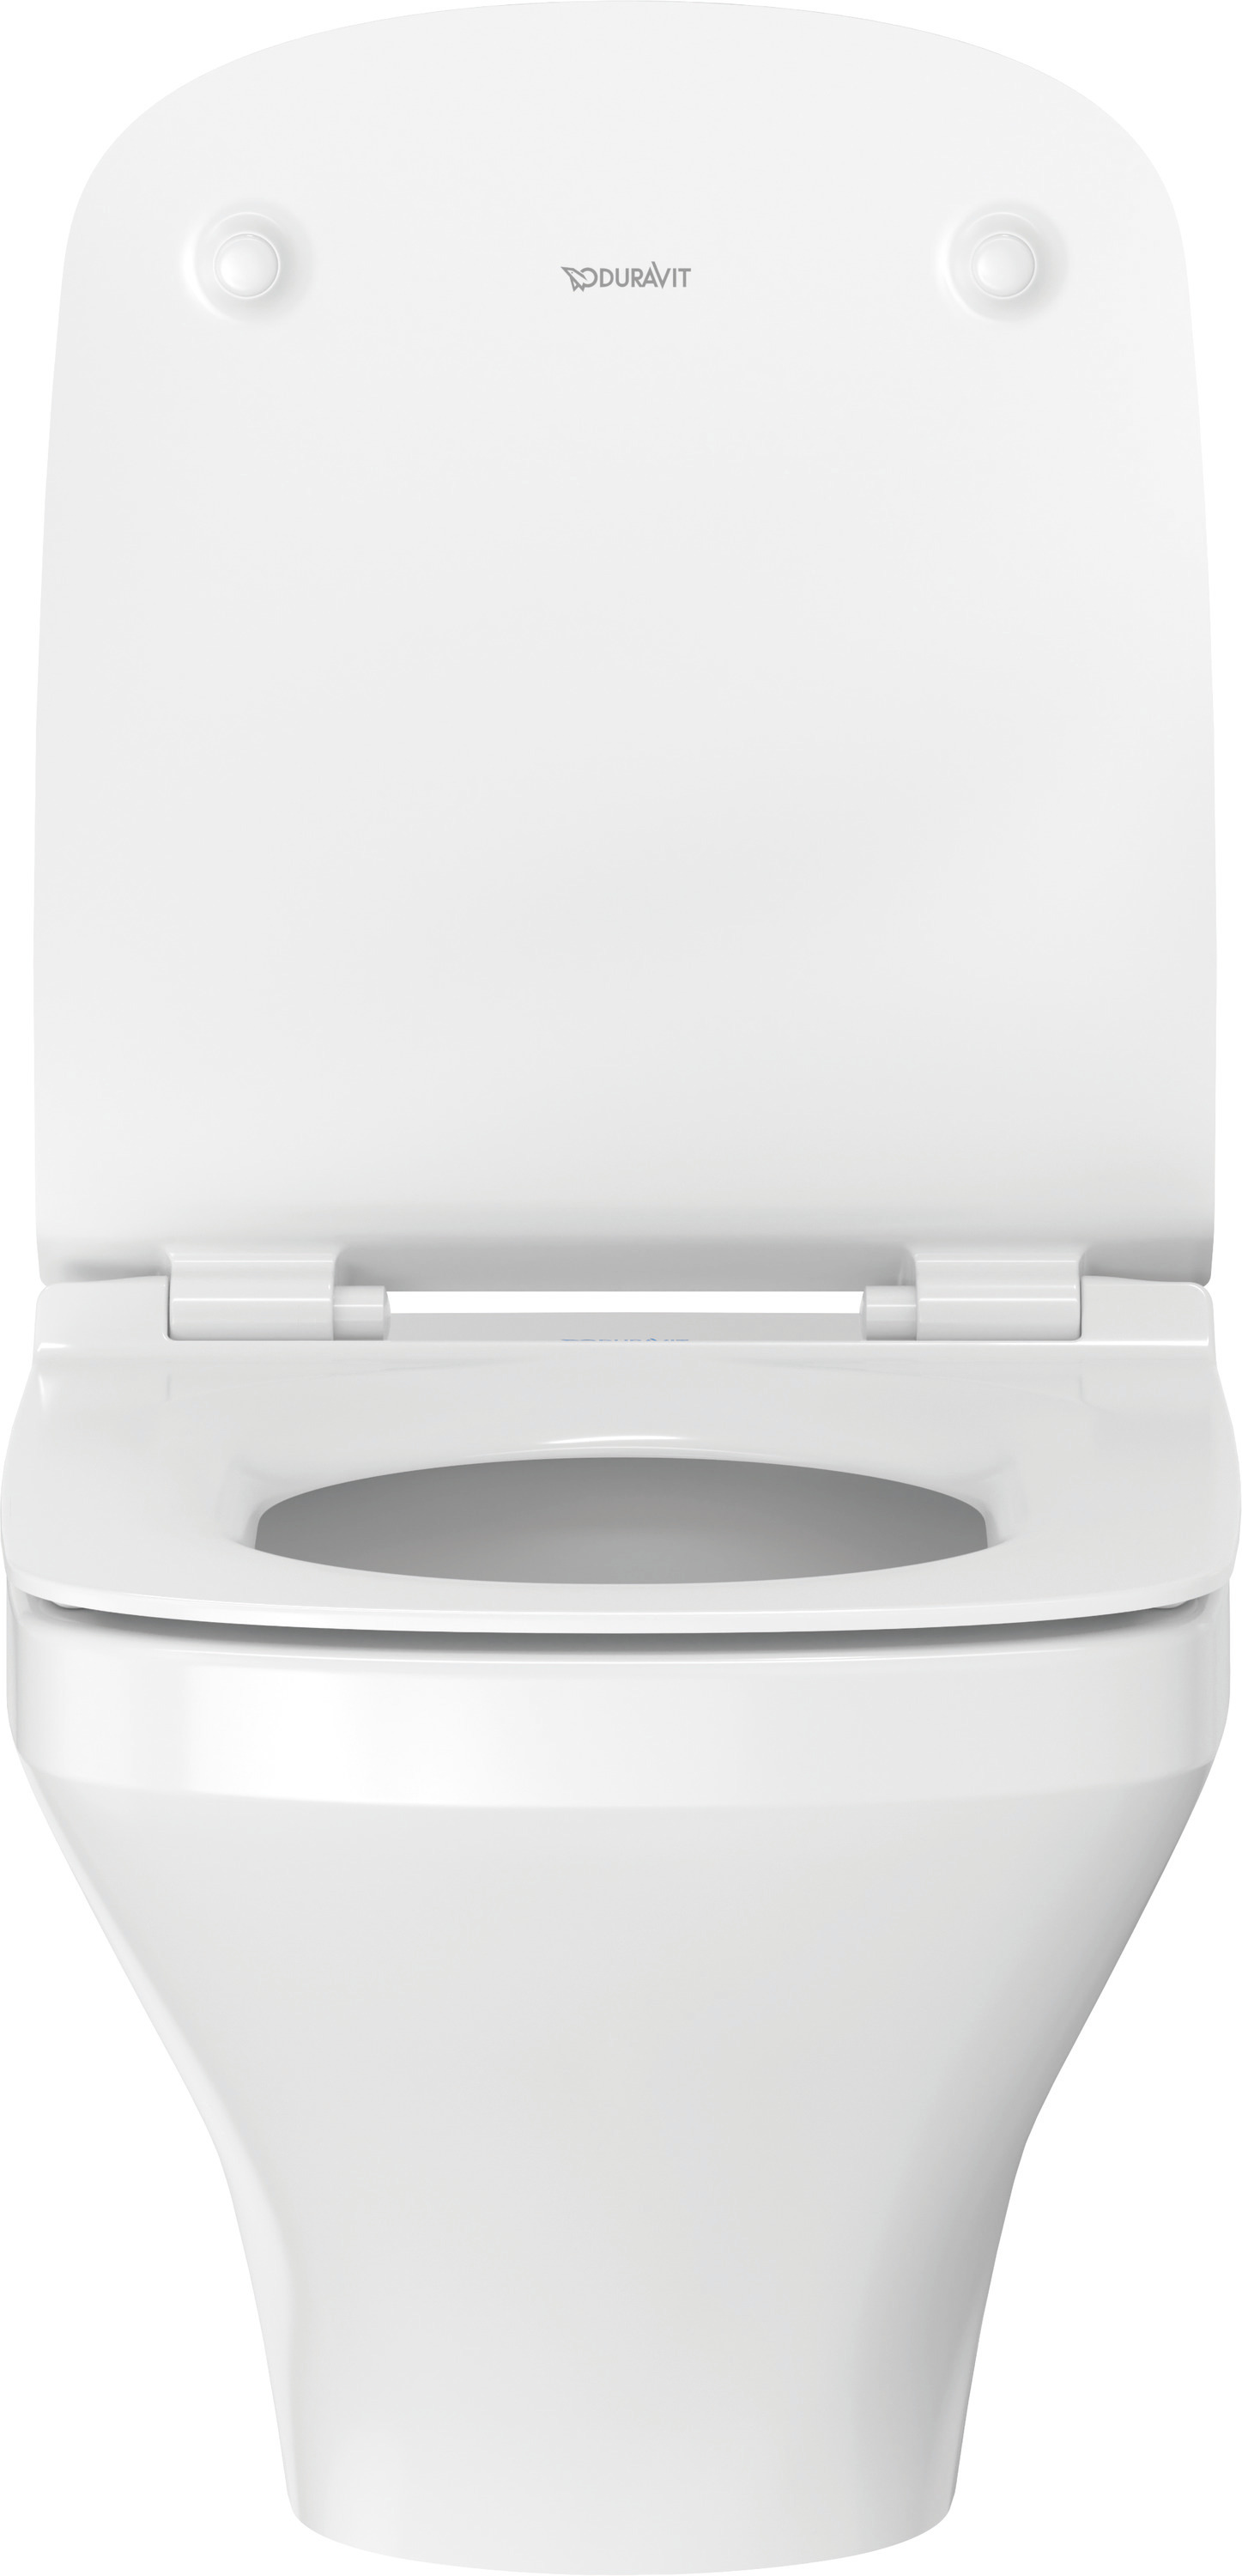 Wand-WC DuraStyle 540 mm Tiefspüler, rimless, weiß